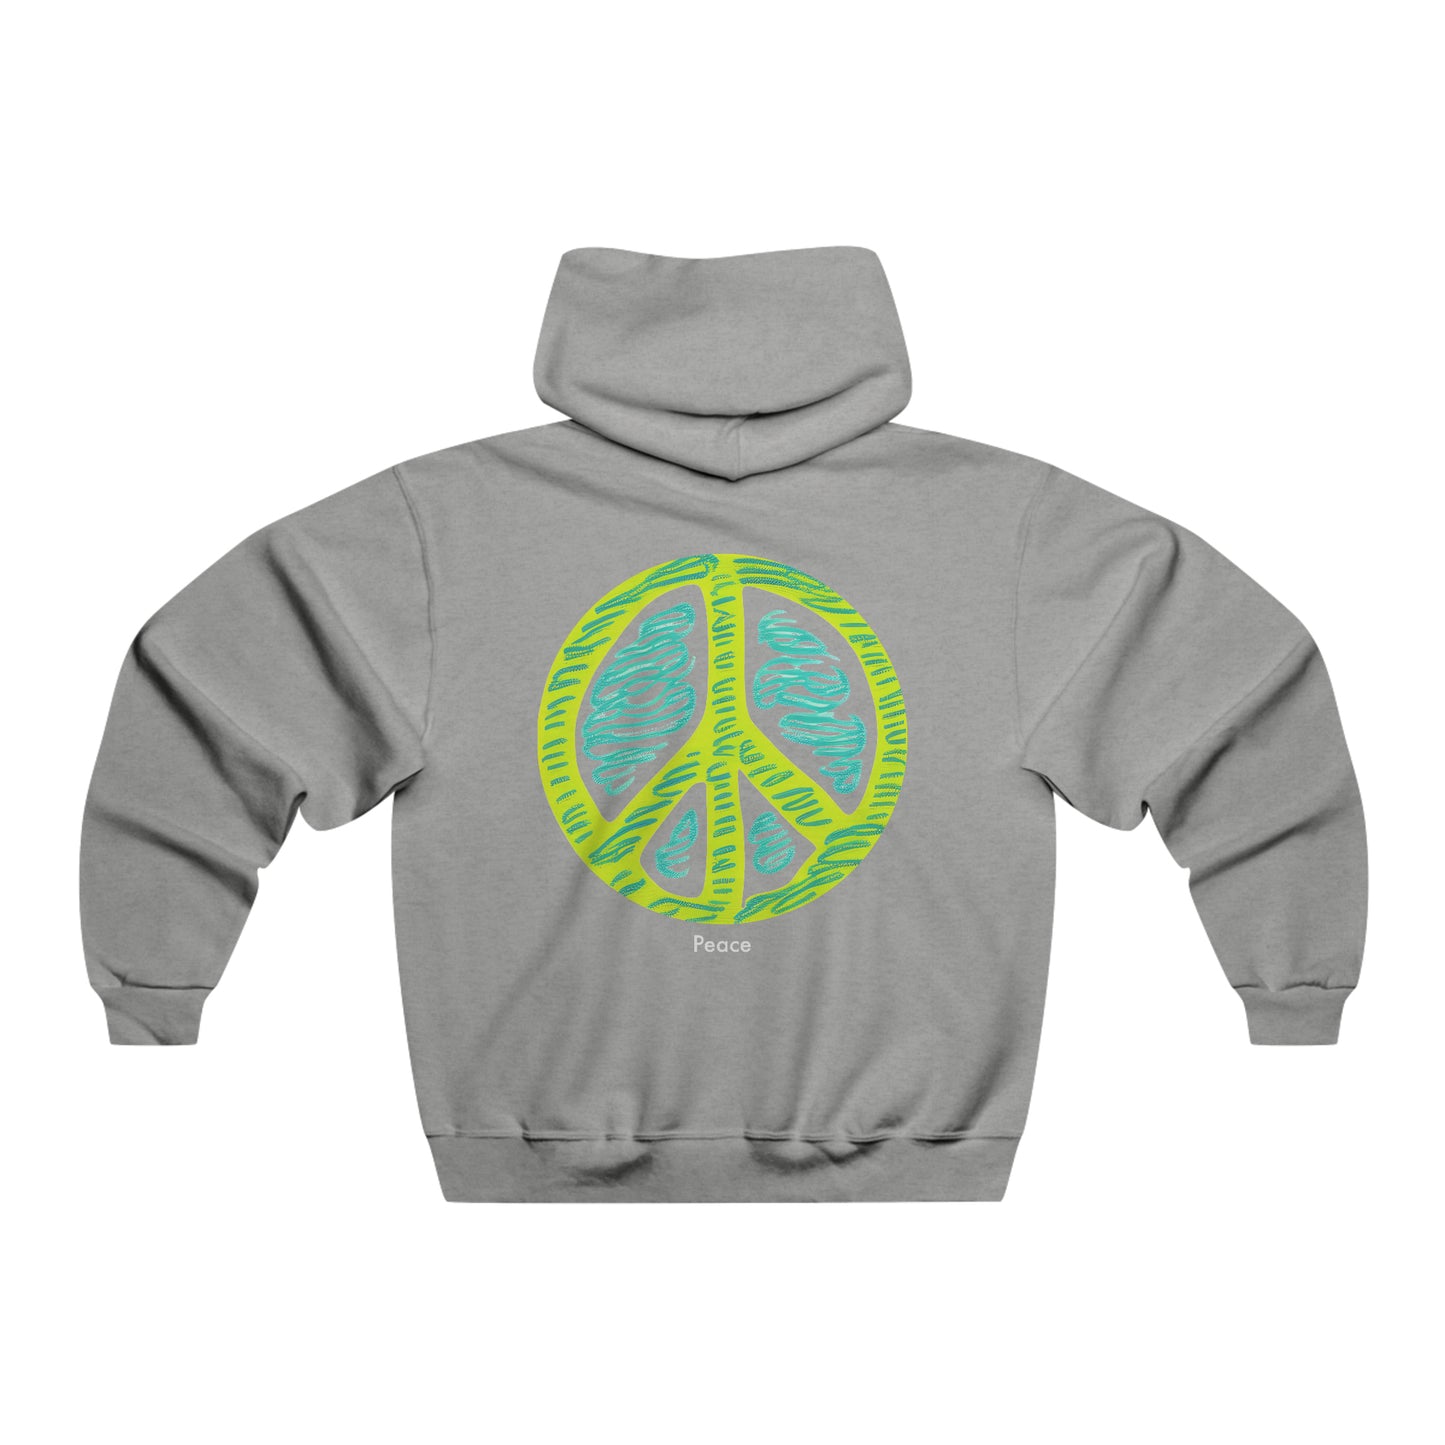 Tranquil Harmony: Minimalist Peace Sign Hooded Sweatshirt for Men